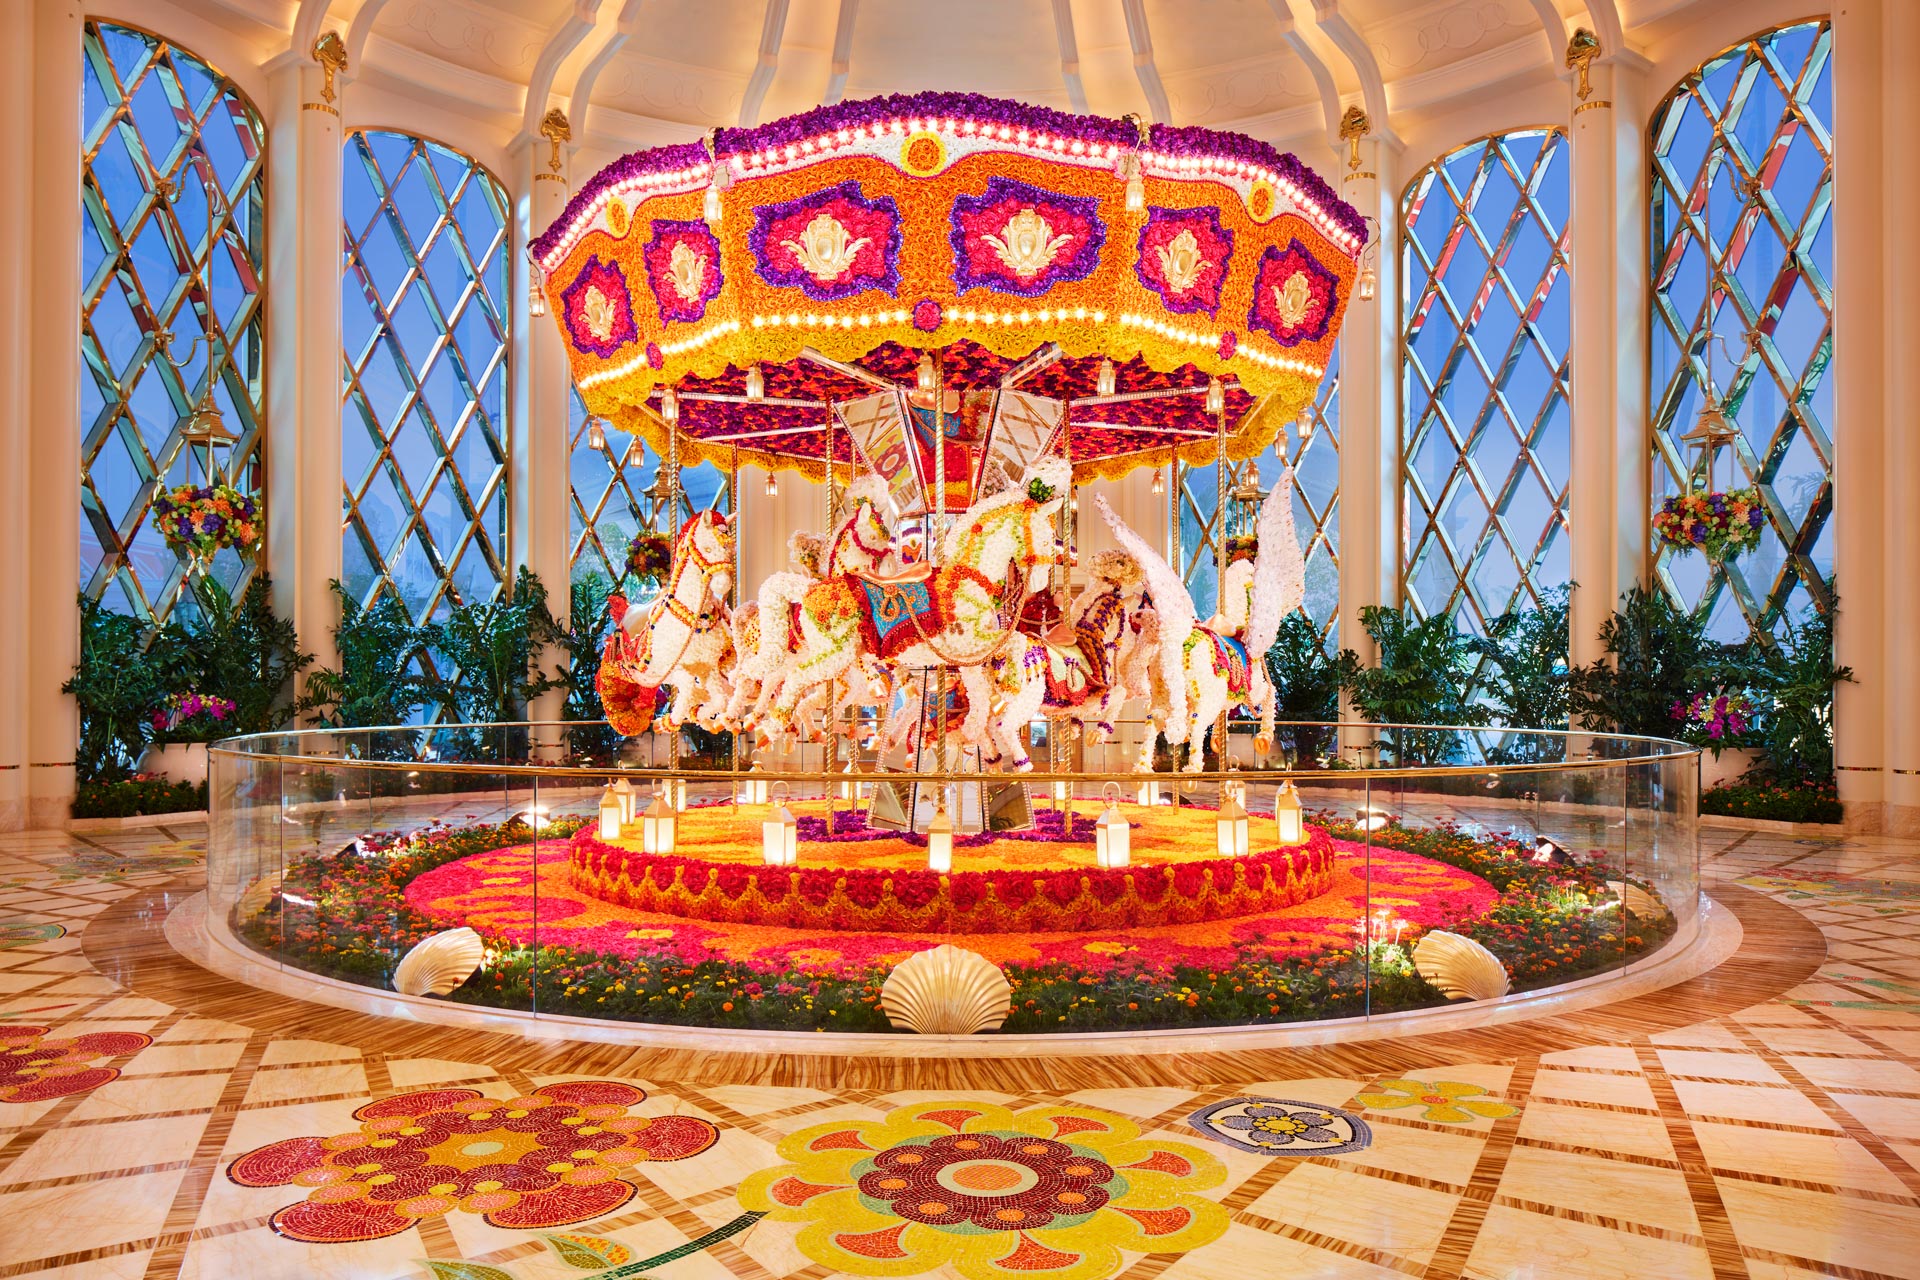 Floral Sculpture Carousel